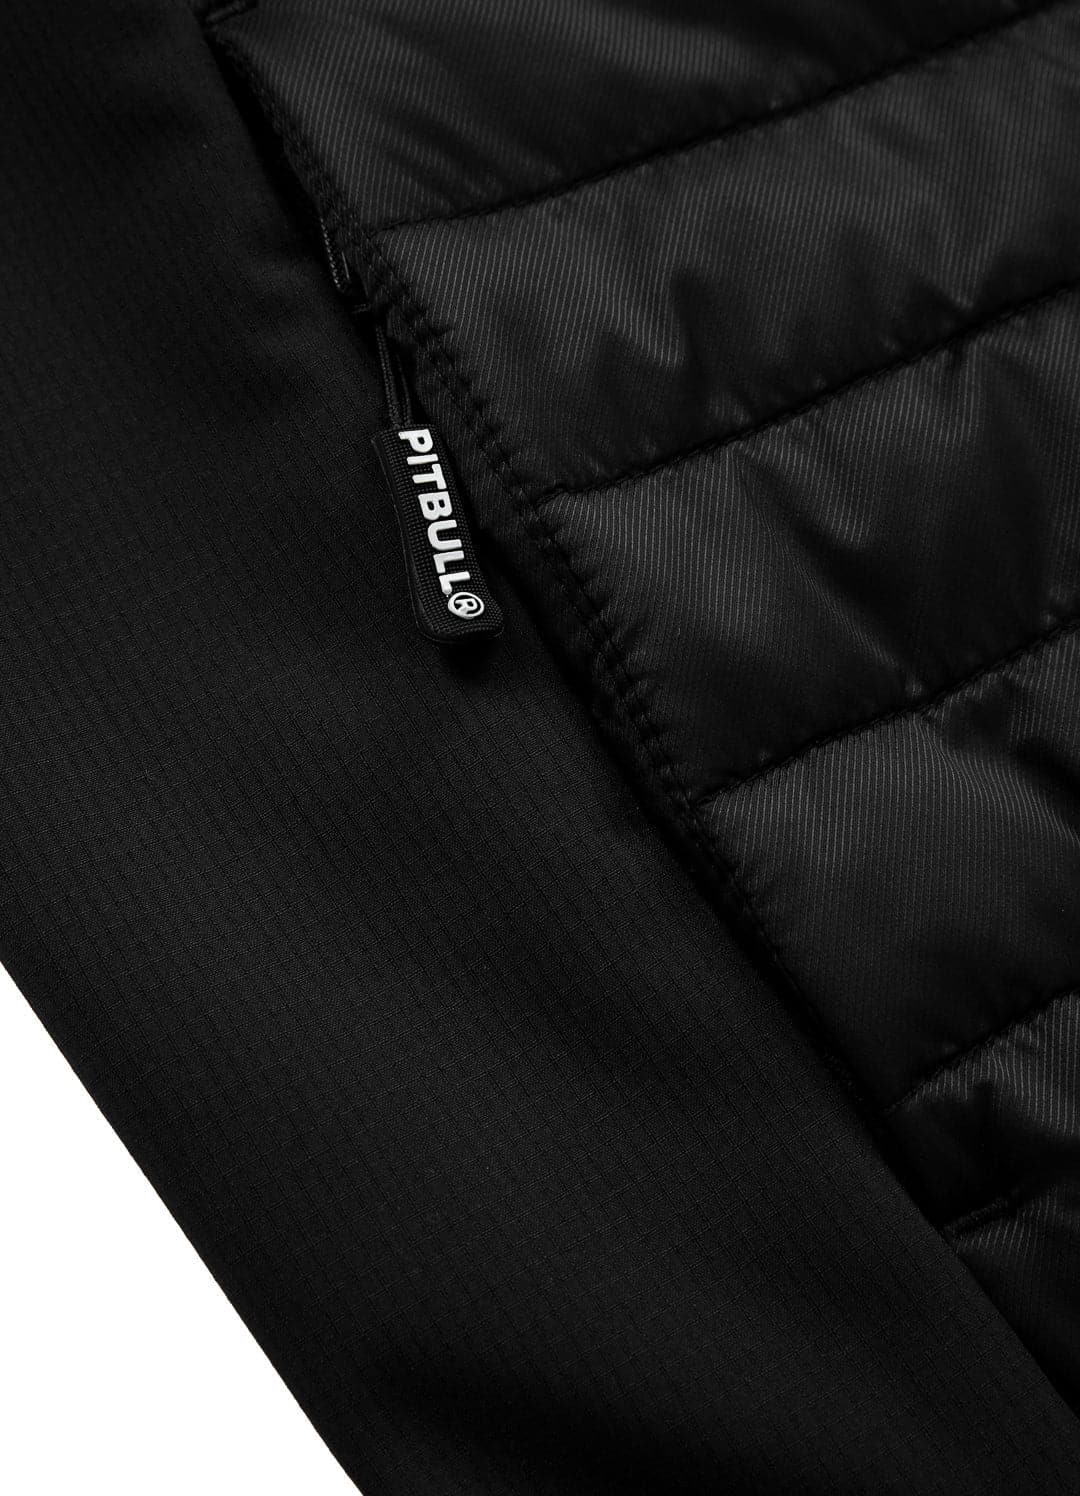 Jacket SHADOW Black - Pitbull West Coast International Store 